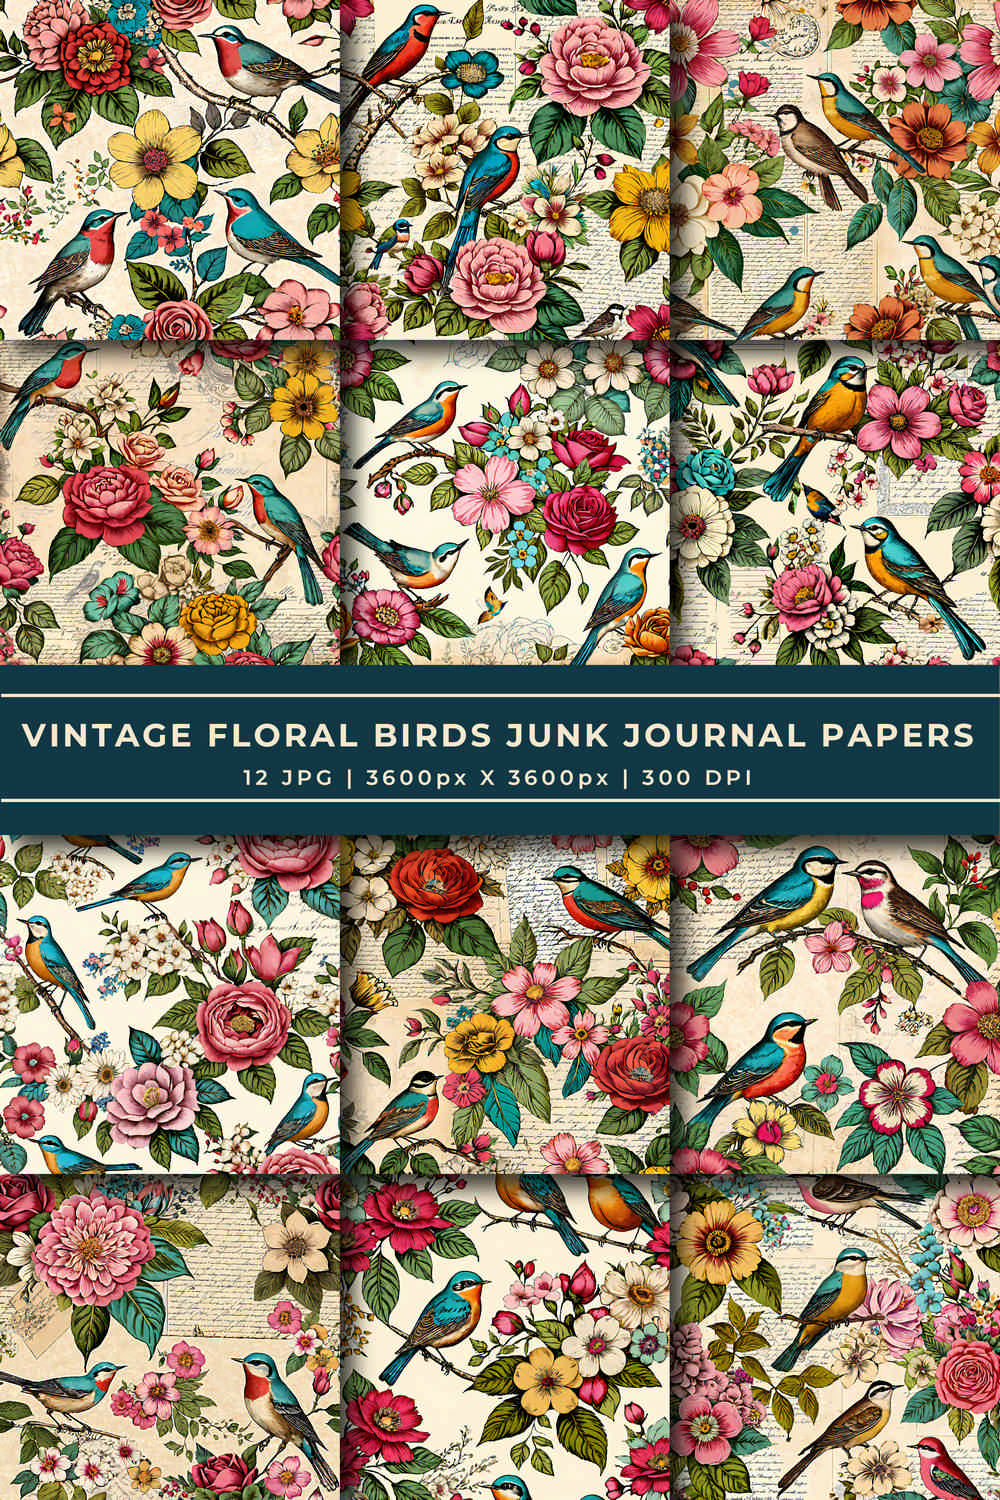 Vintage Floral Birds Junk Journal Papers pinterest preview image.